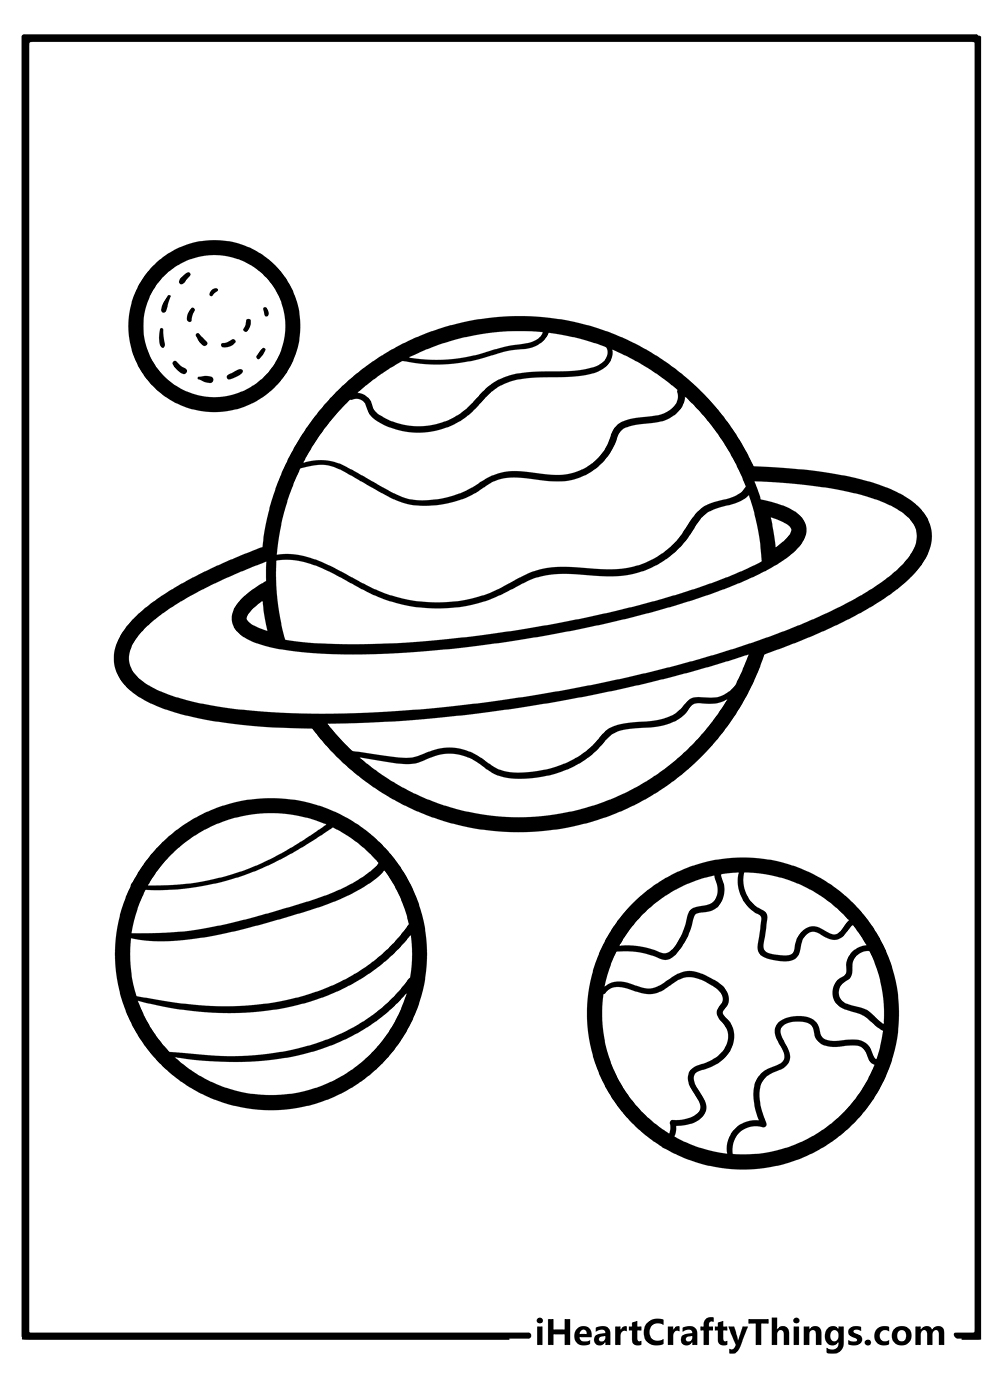 Solar System Coloring Original Sheet for children free download